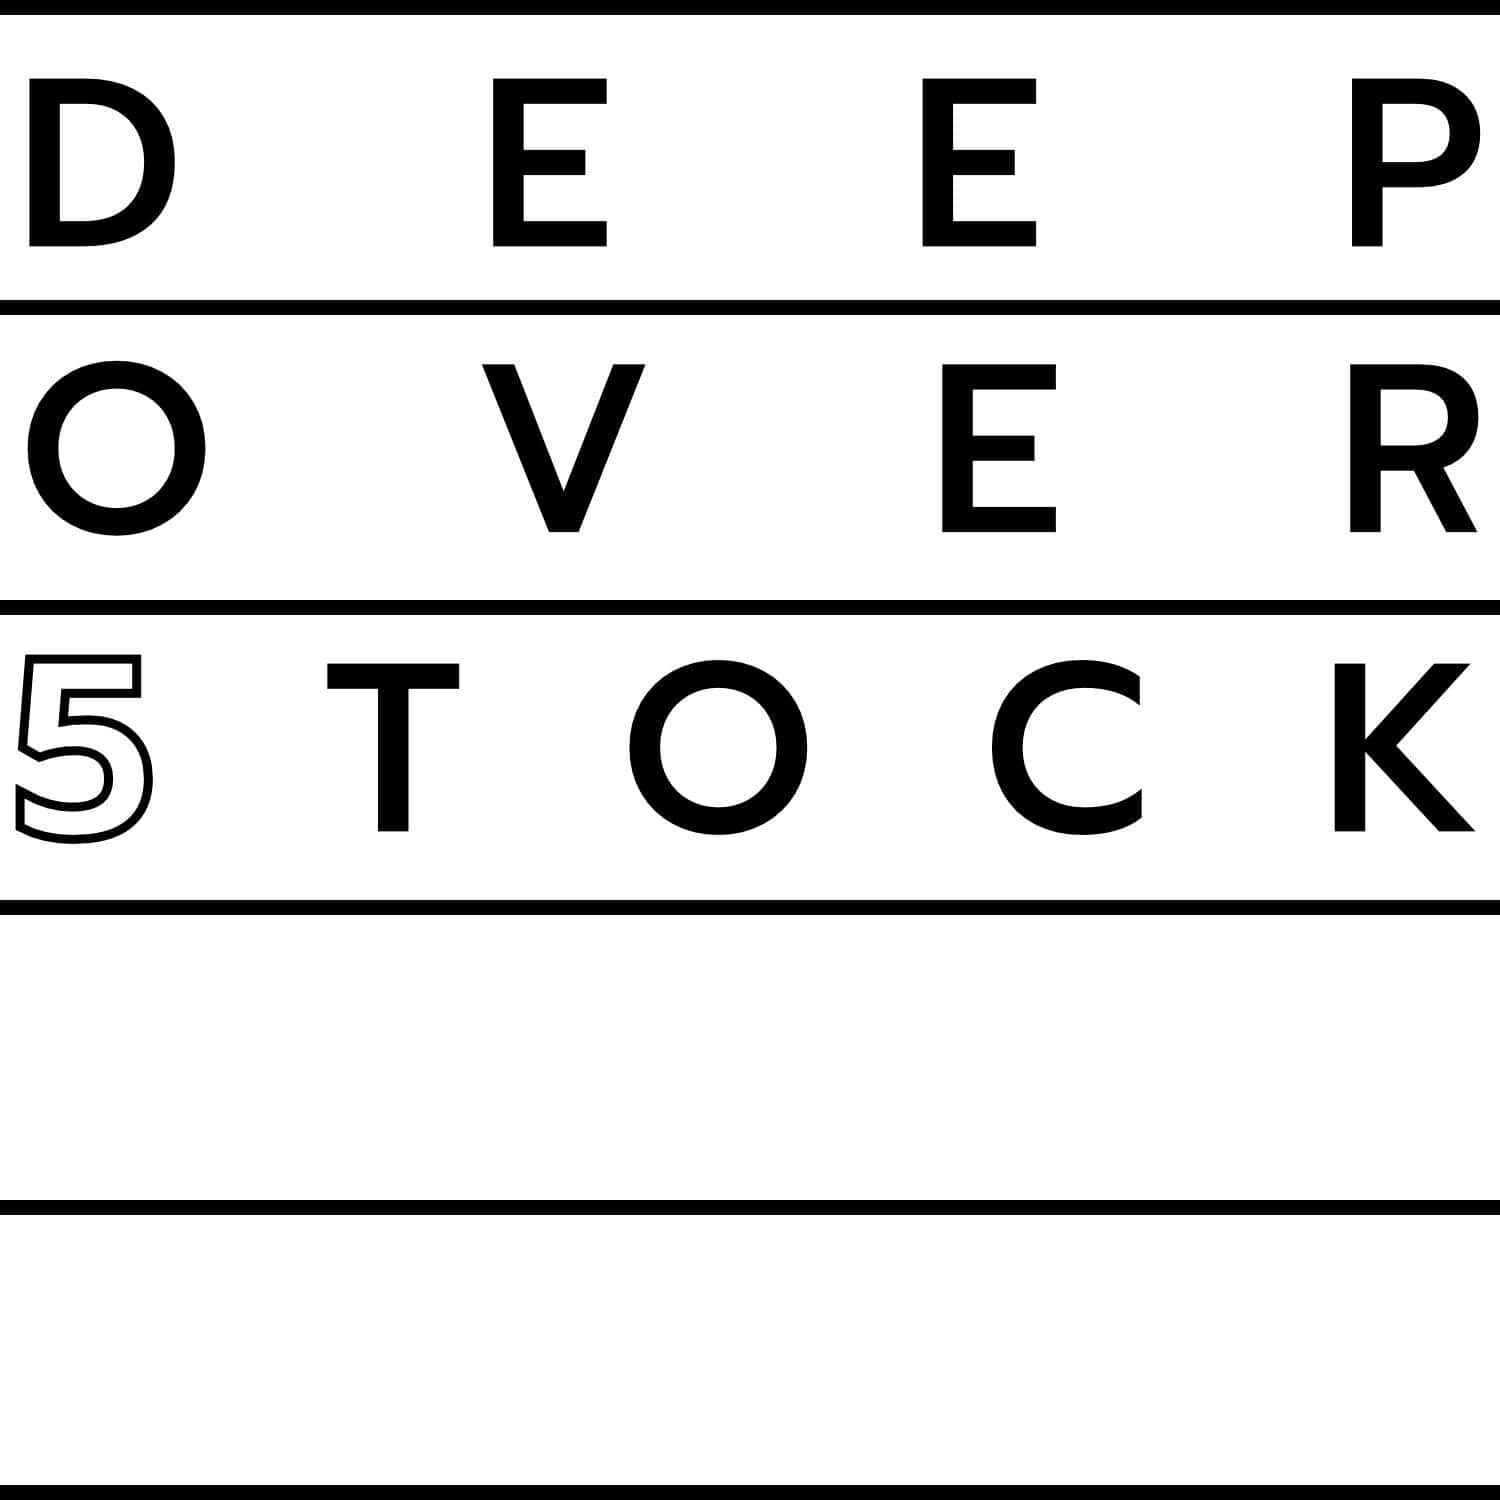 Deep Overstock logo